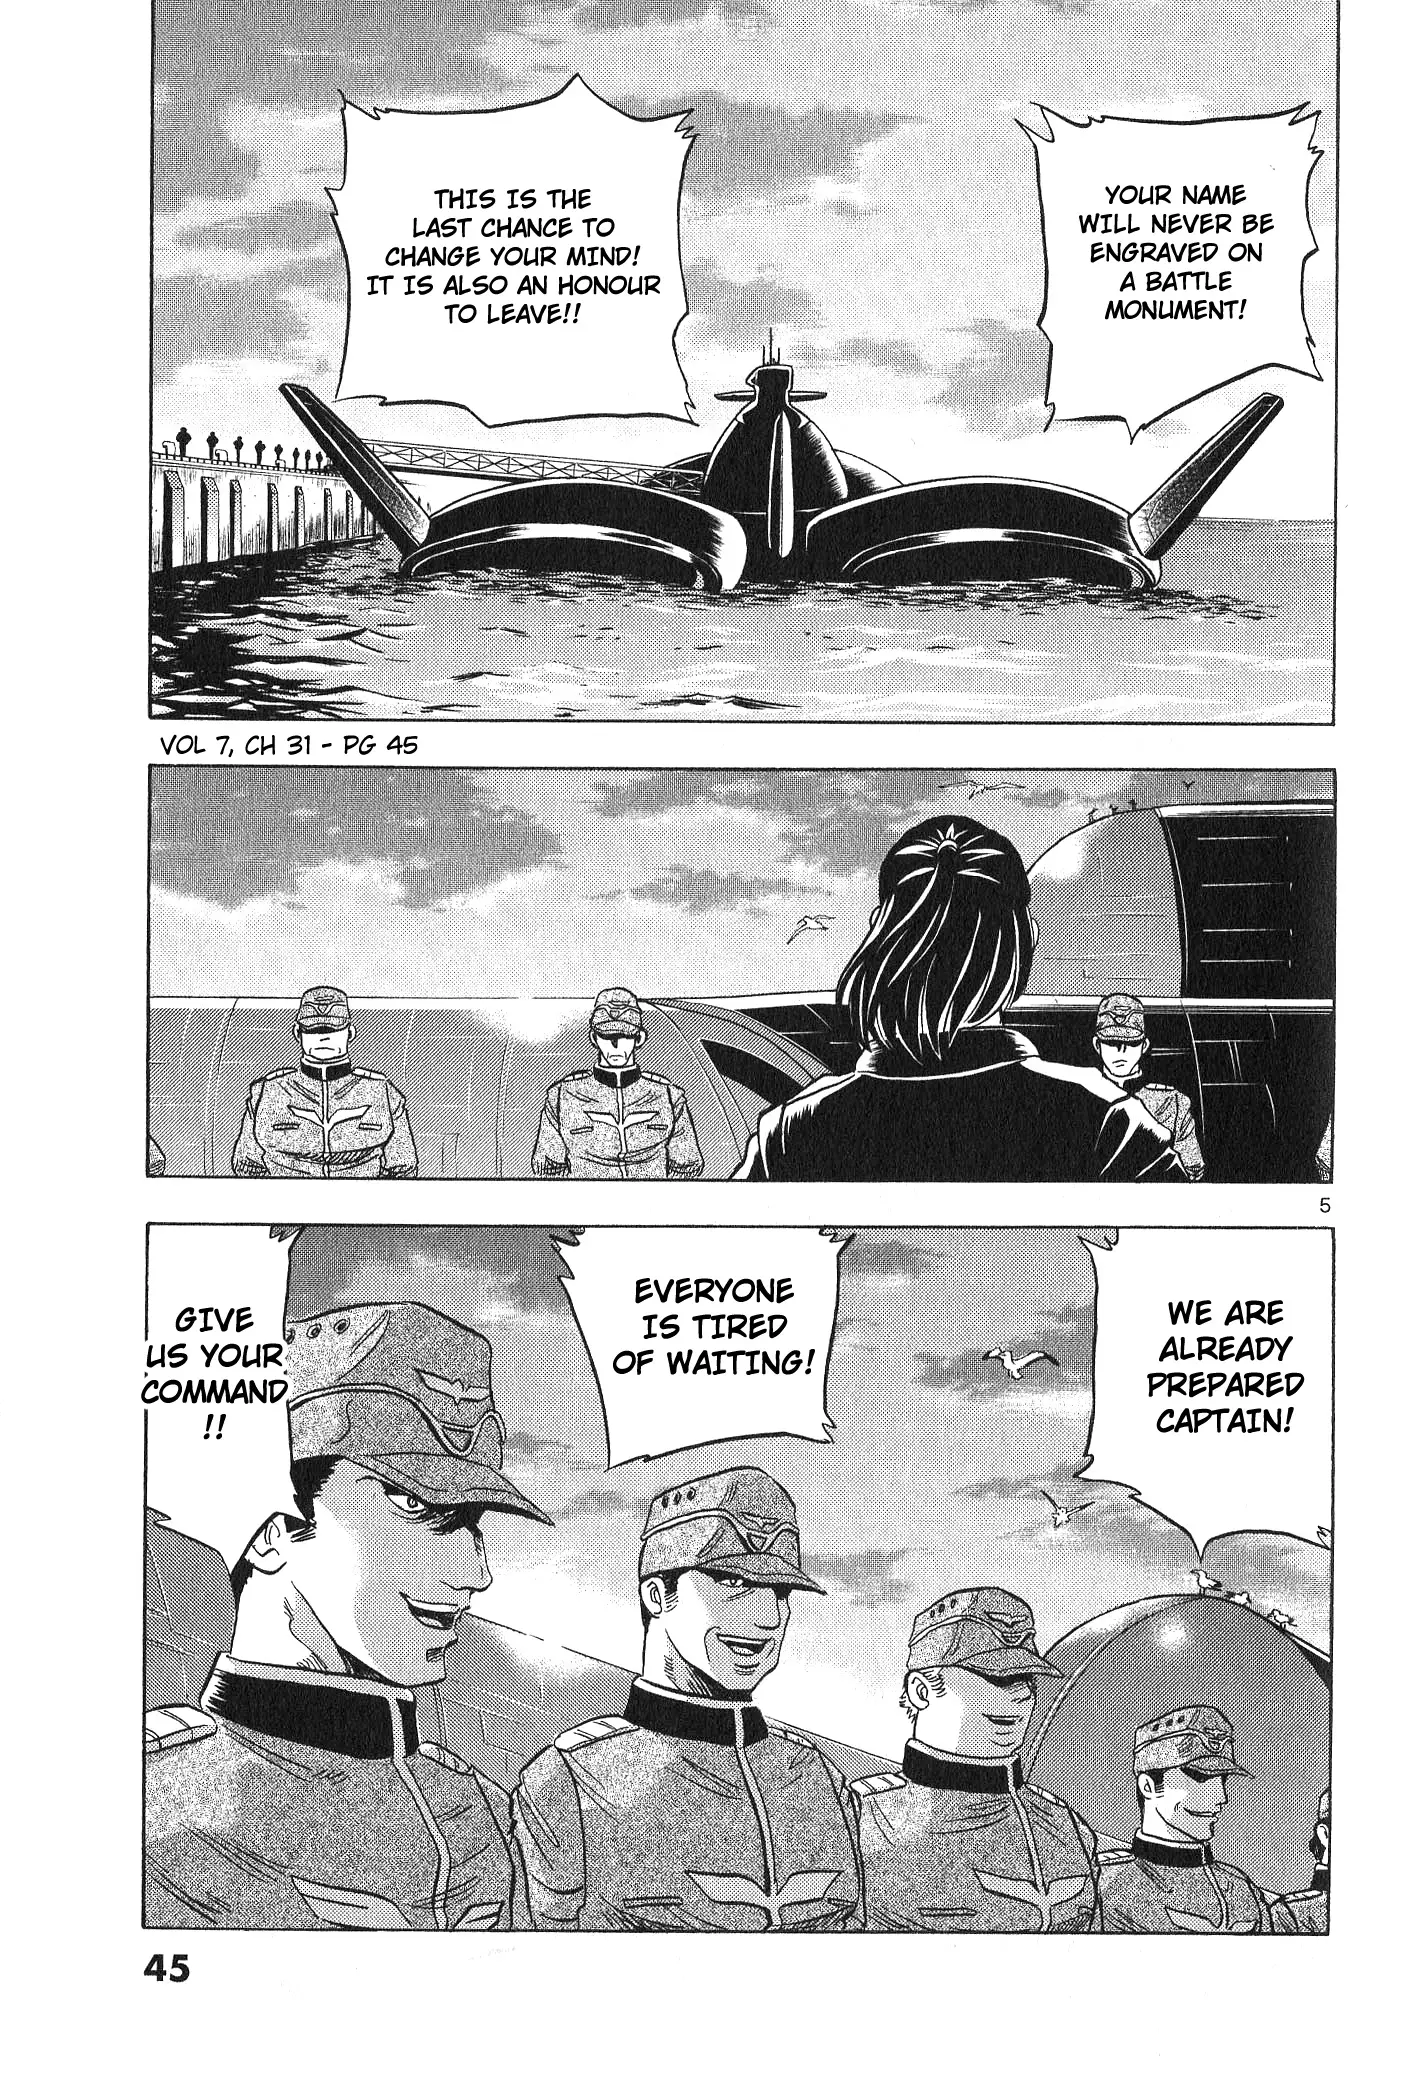 Mobile Suit Gundam Aggressor - 31 page 5-4e49d393